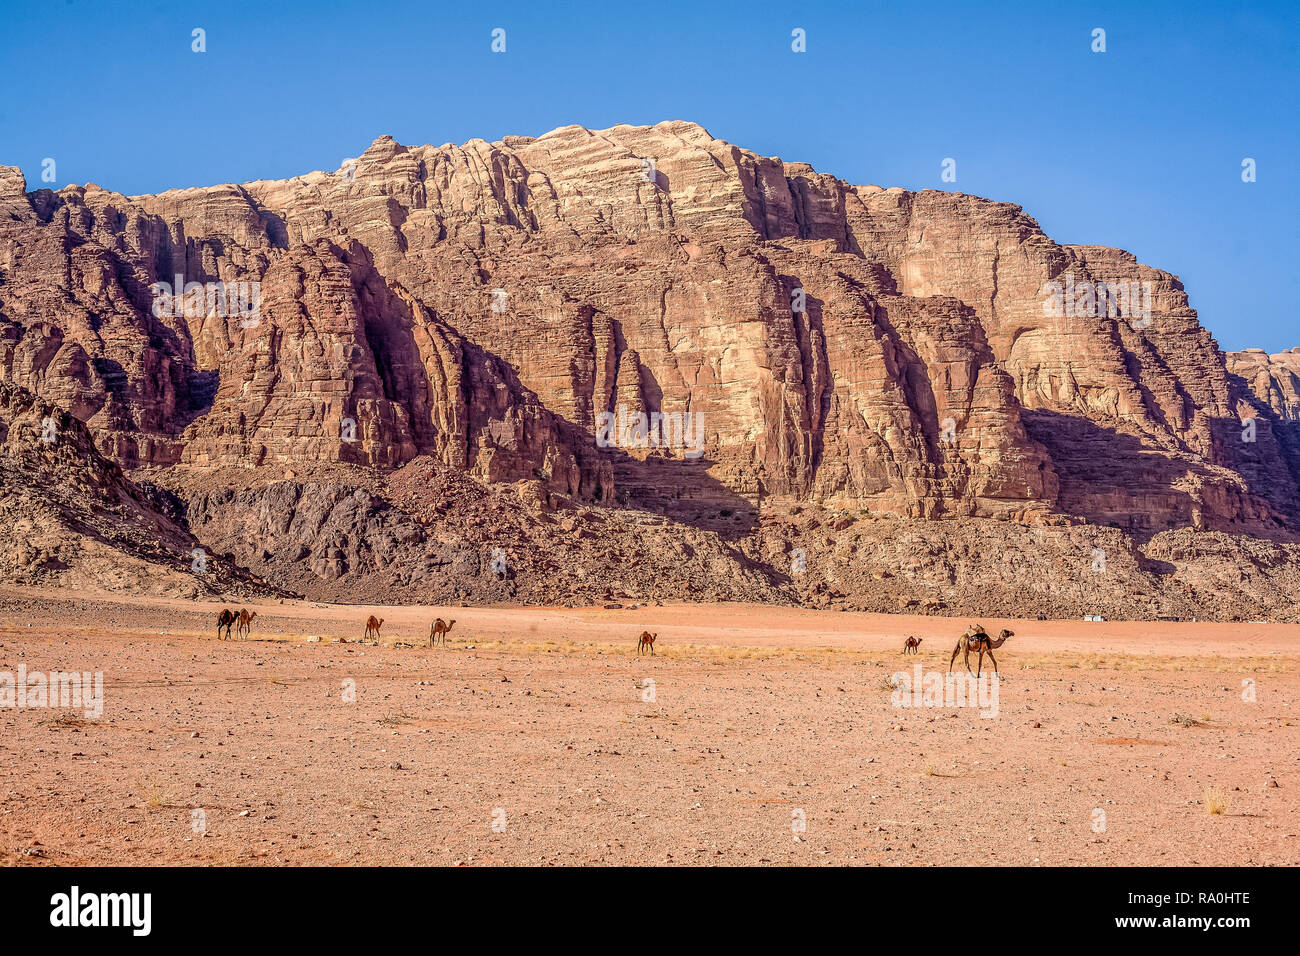 Wadi rum jordan camel hi-res stock photography and images - Alamy